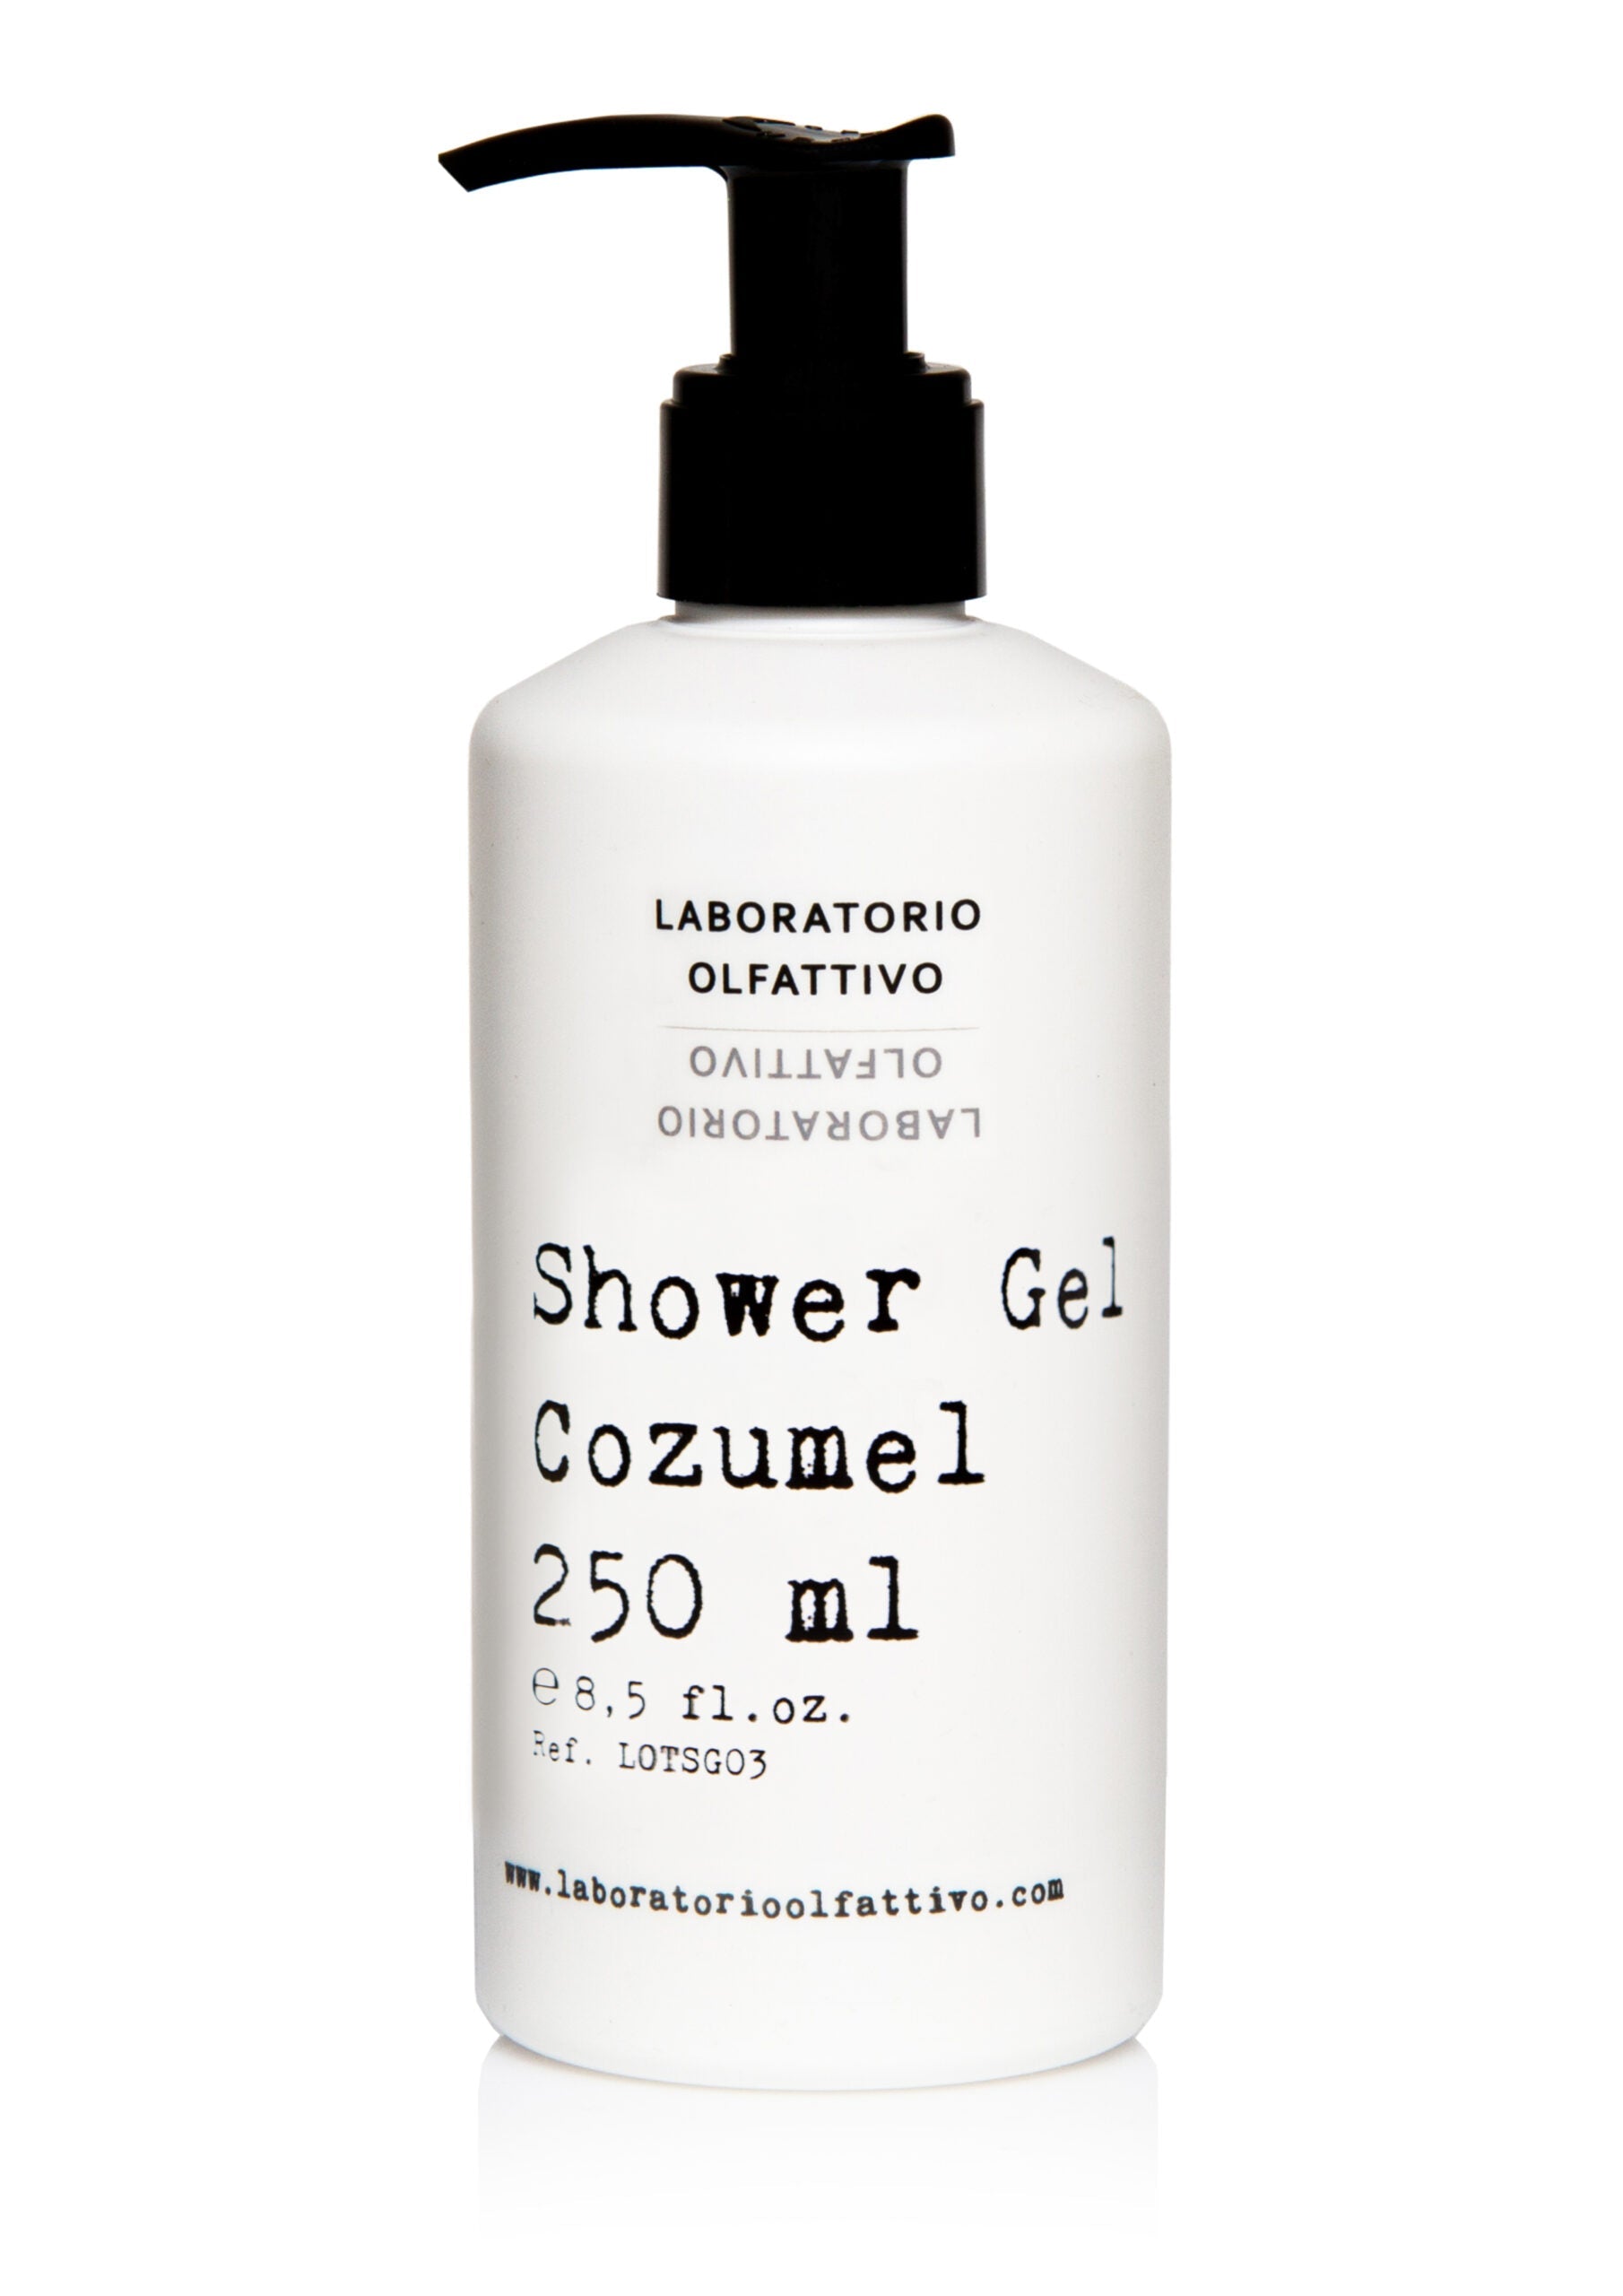 Laboratorio Olfattivo Cozumel Shower Gel